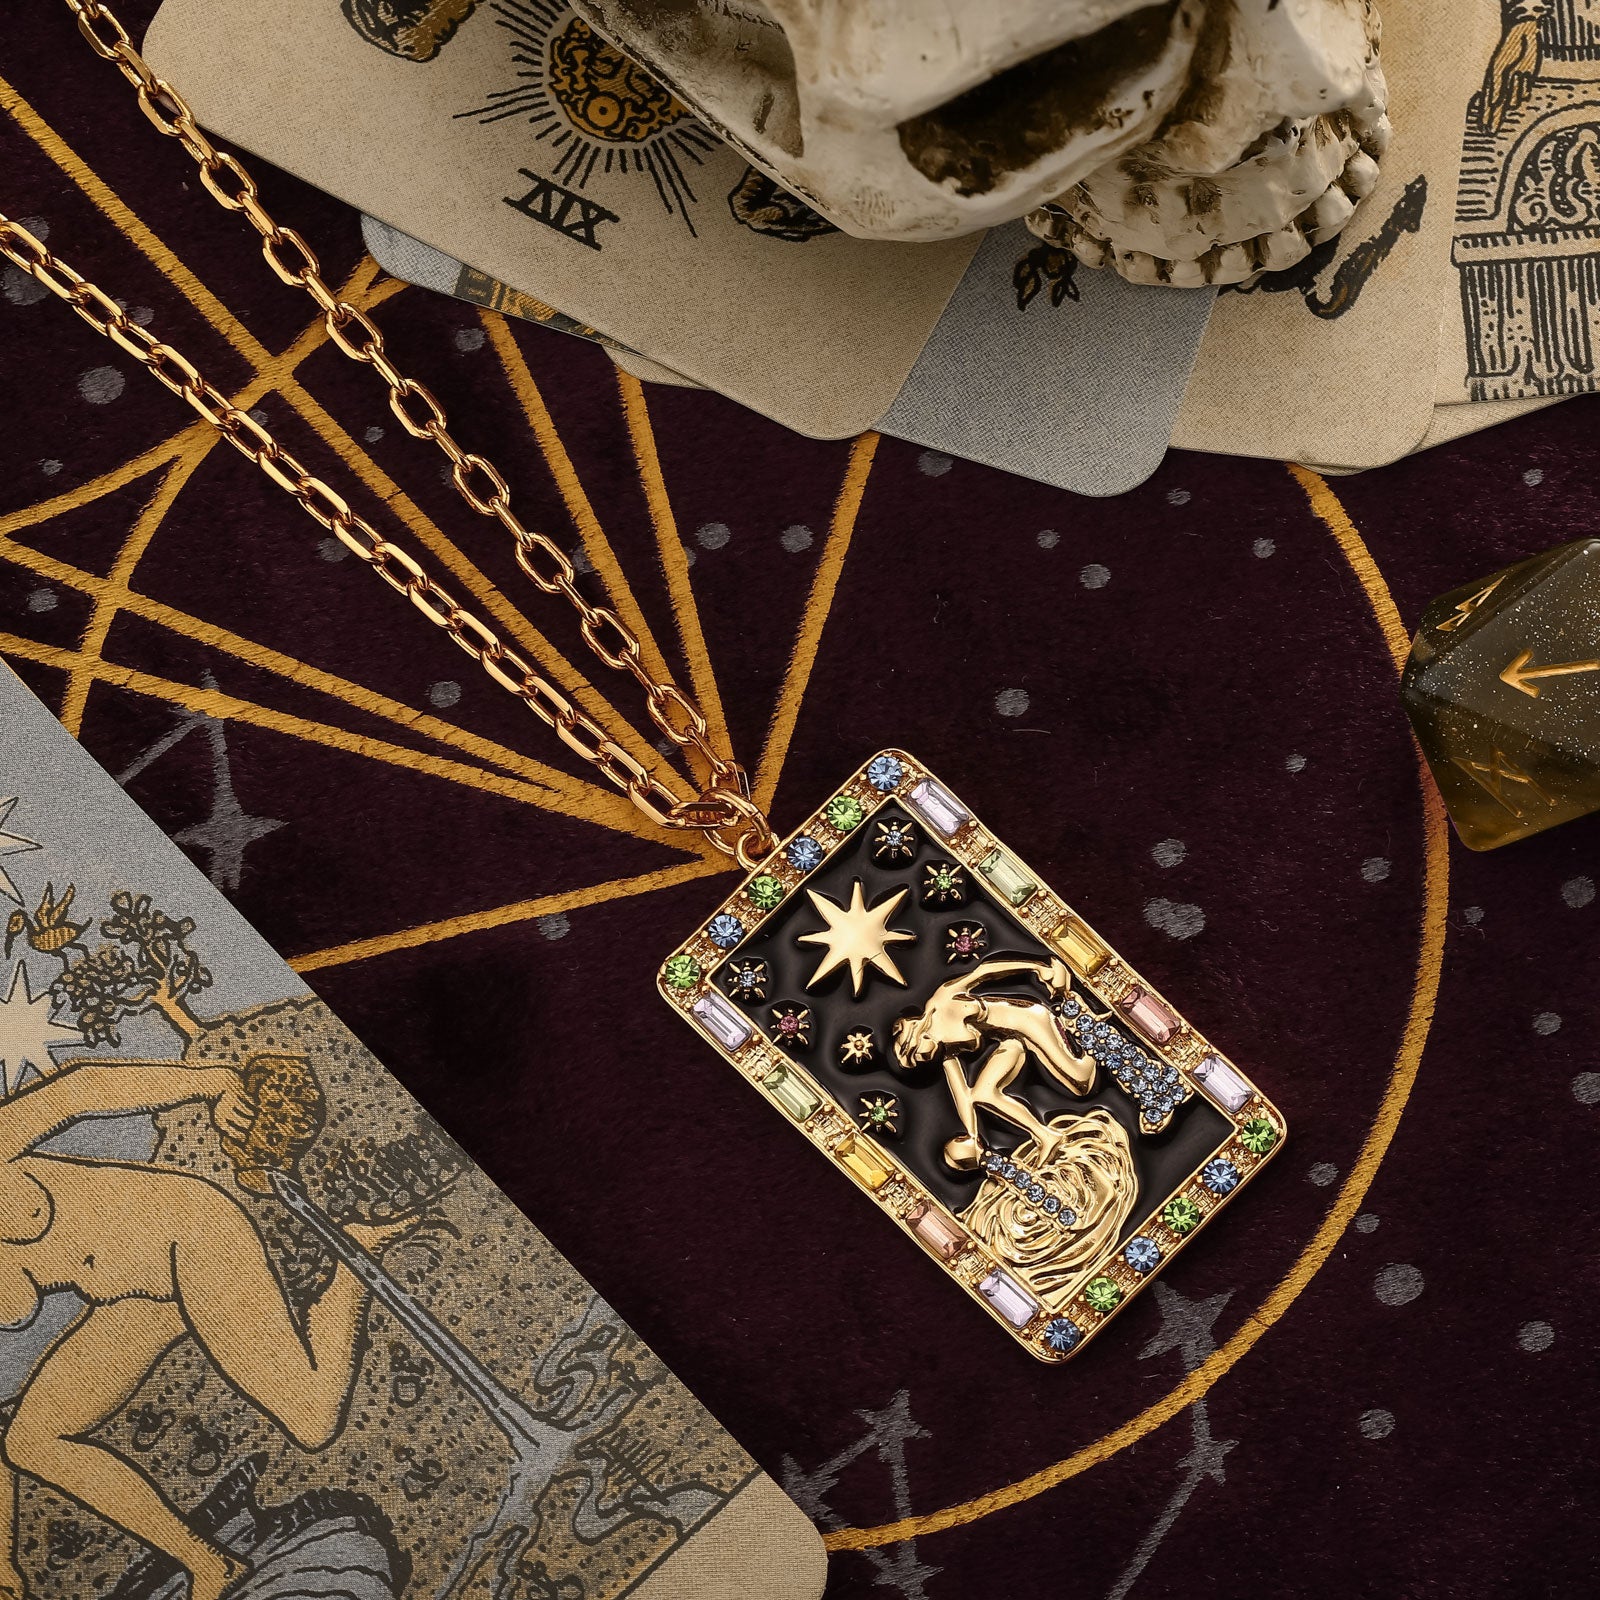 The Star Tarot Card Necklace